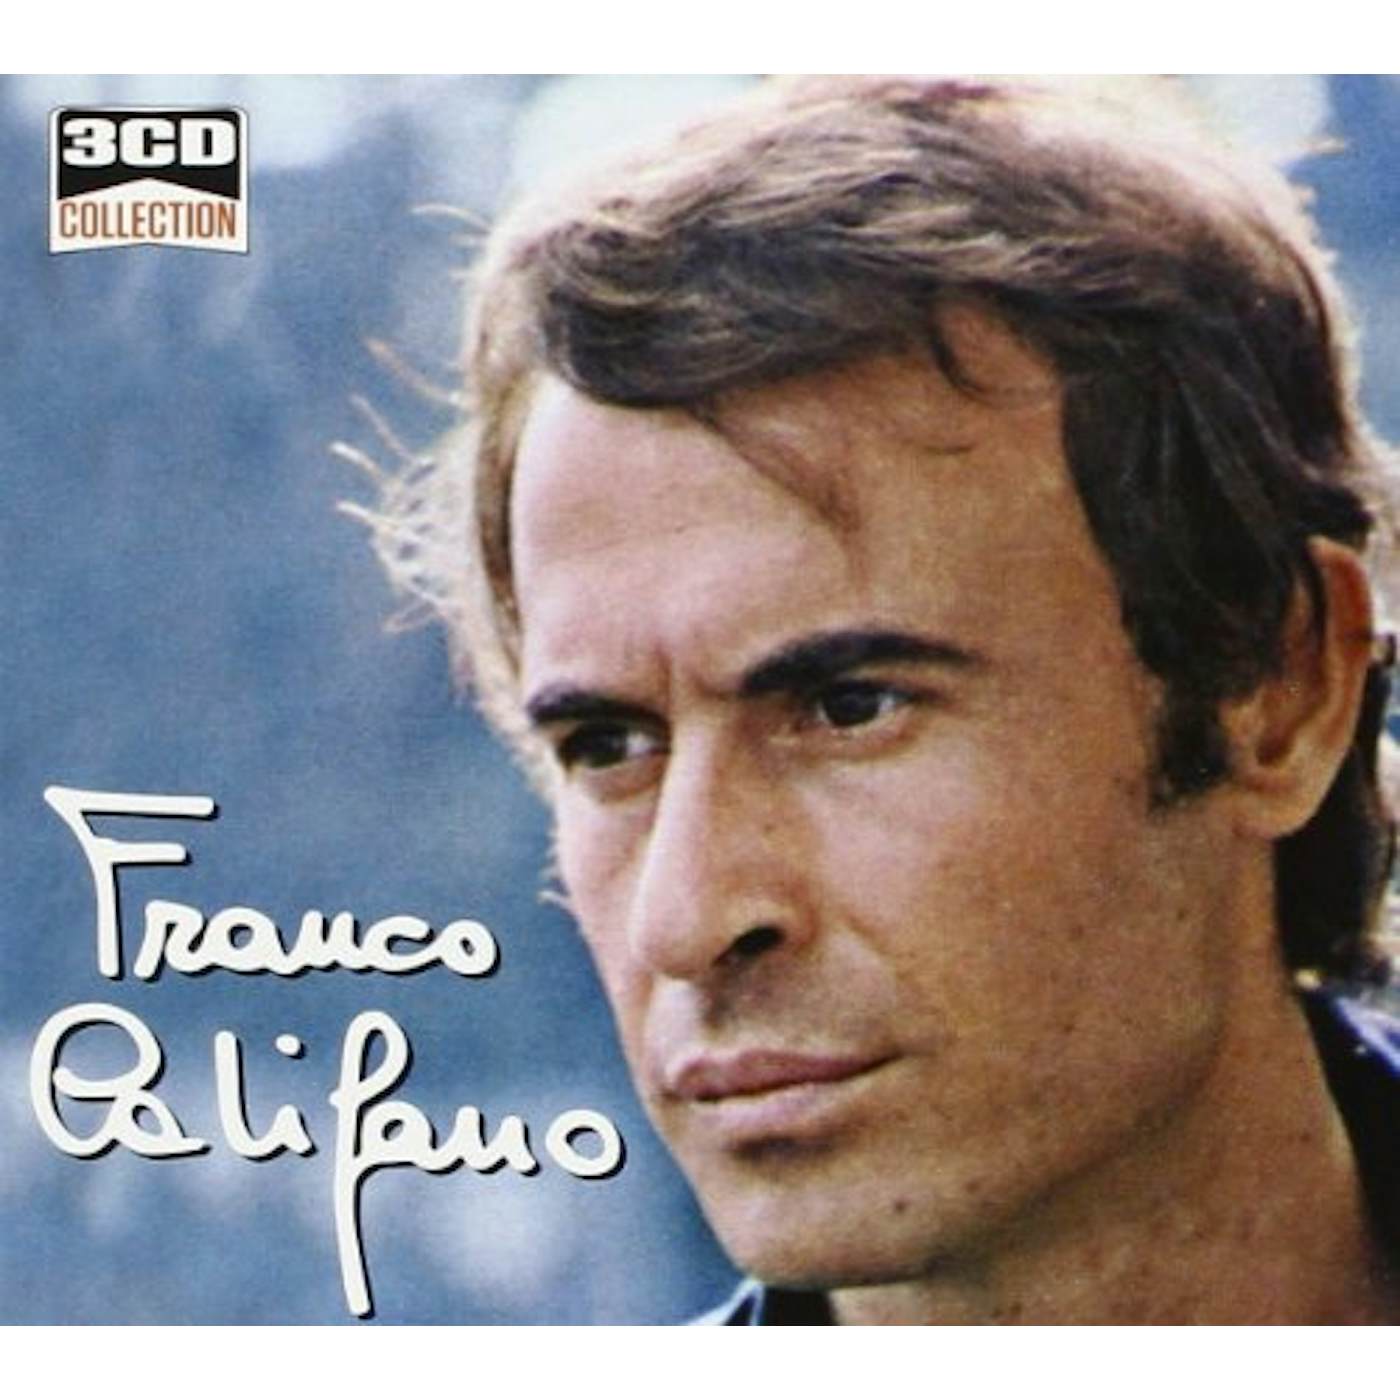 3CD COLLECTION: FRANCO CALIFANO CD